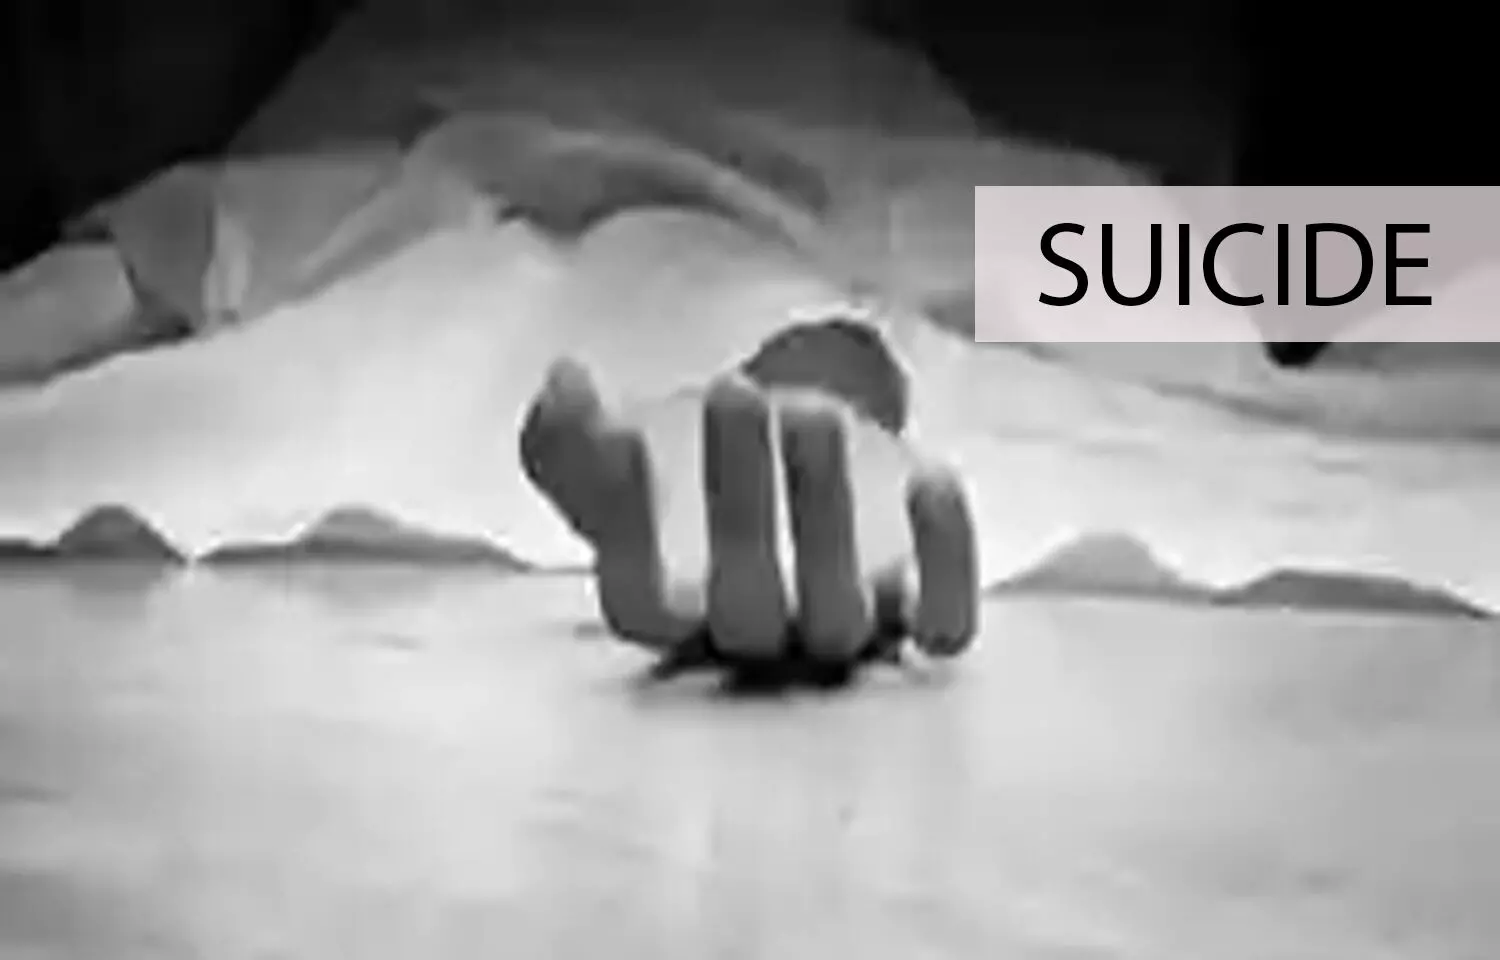 Karnataka doctor, BS Yediyurappas granddaughter found hanging inside her flat, suicide suspected